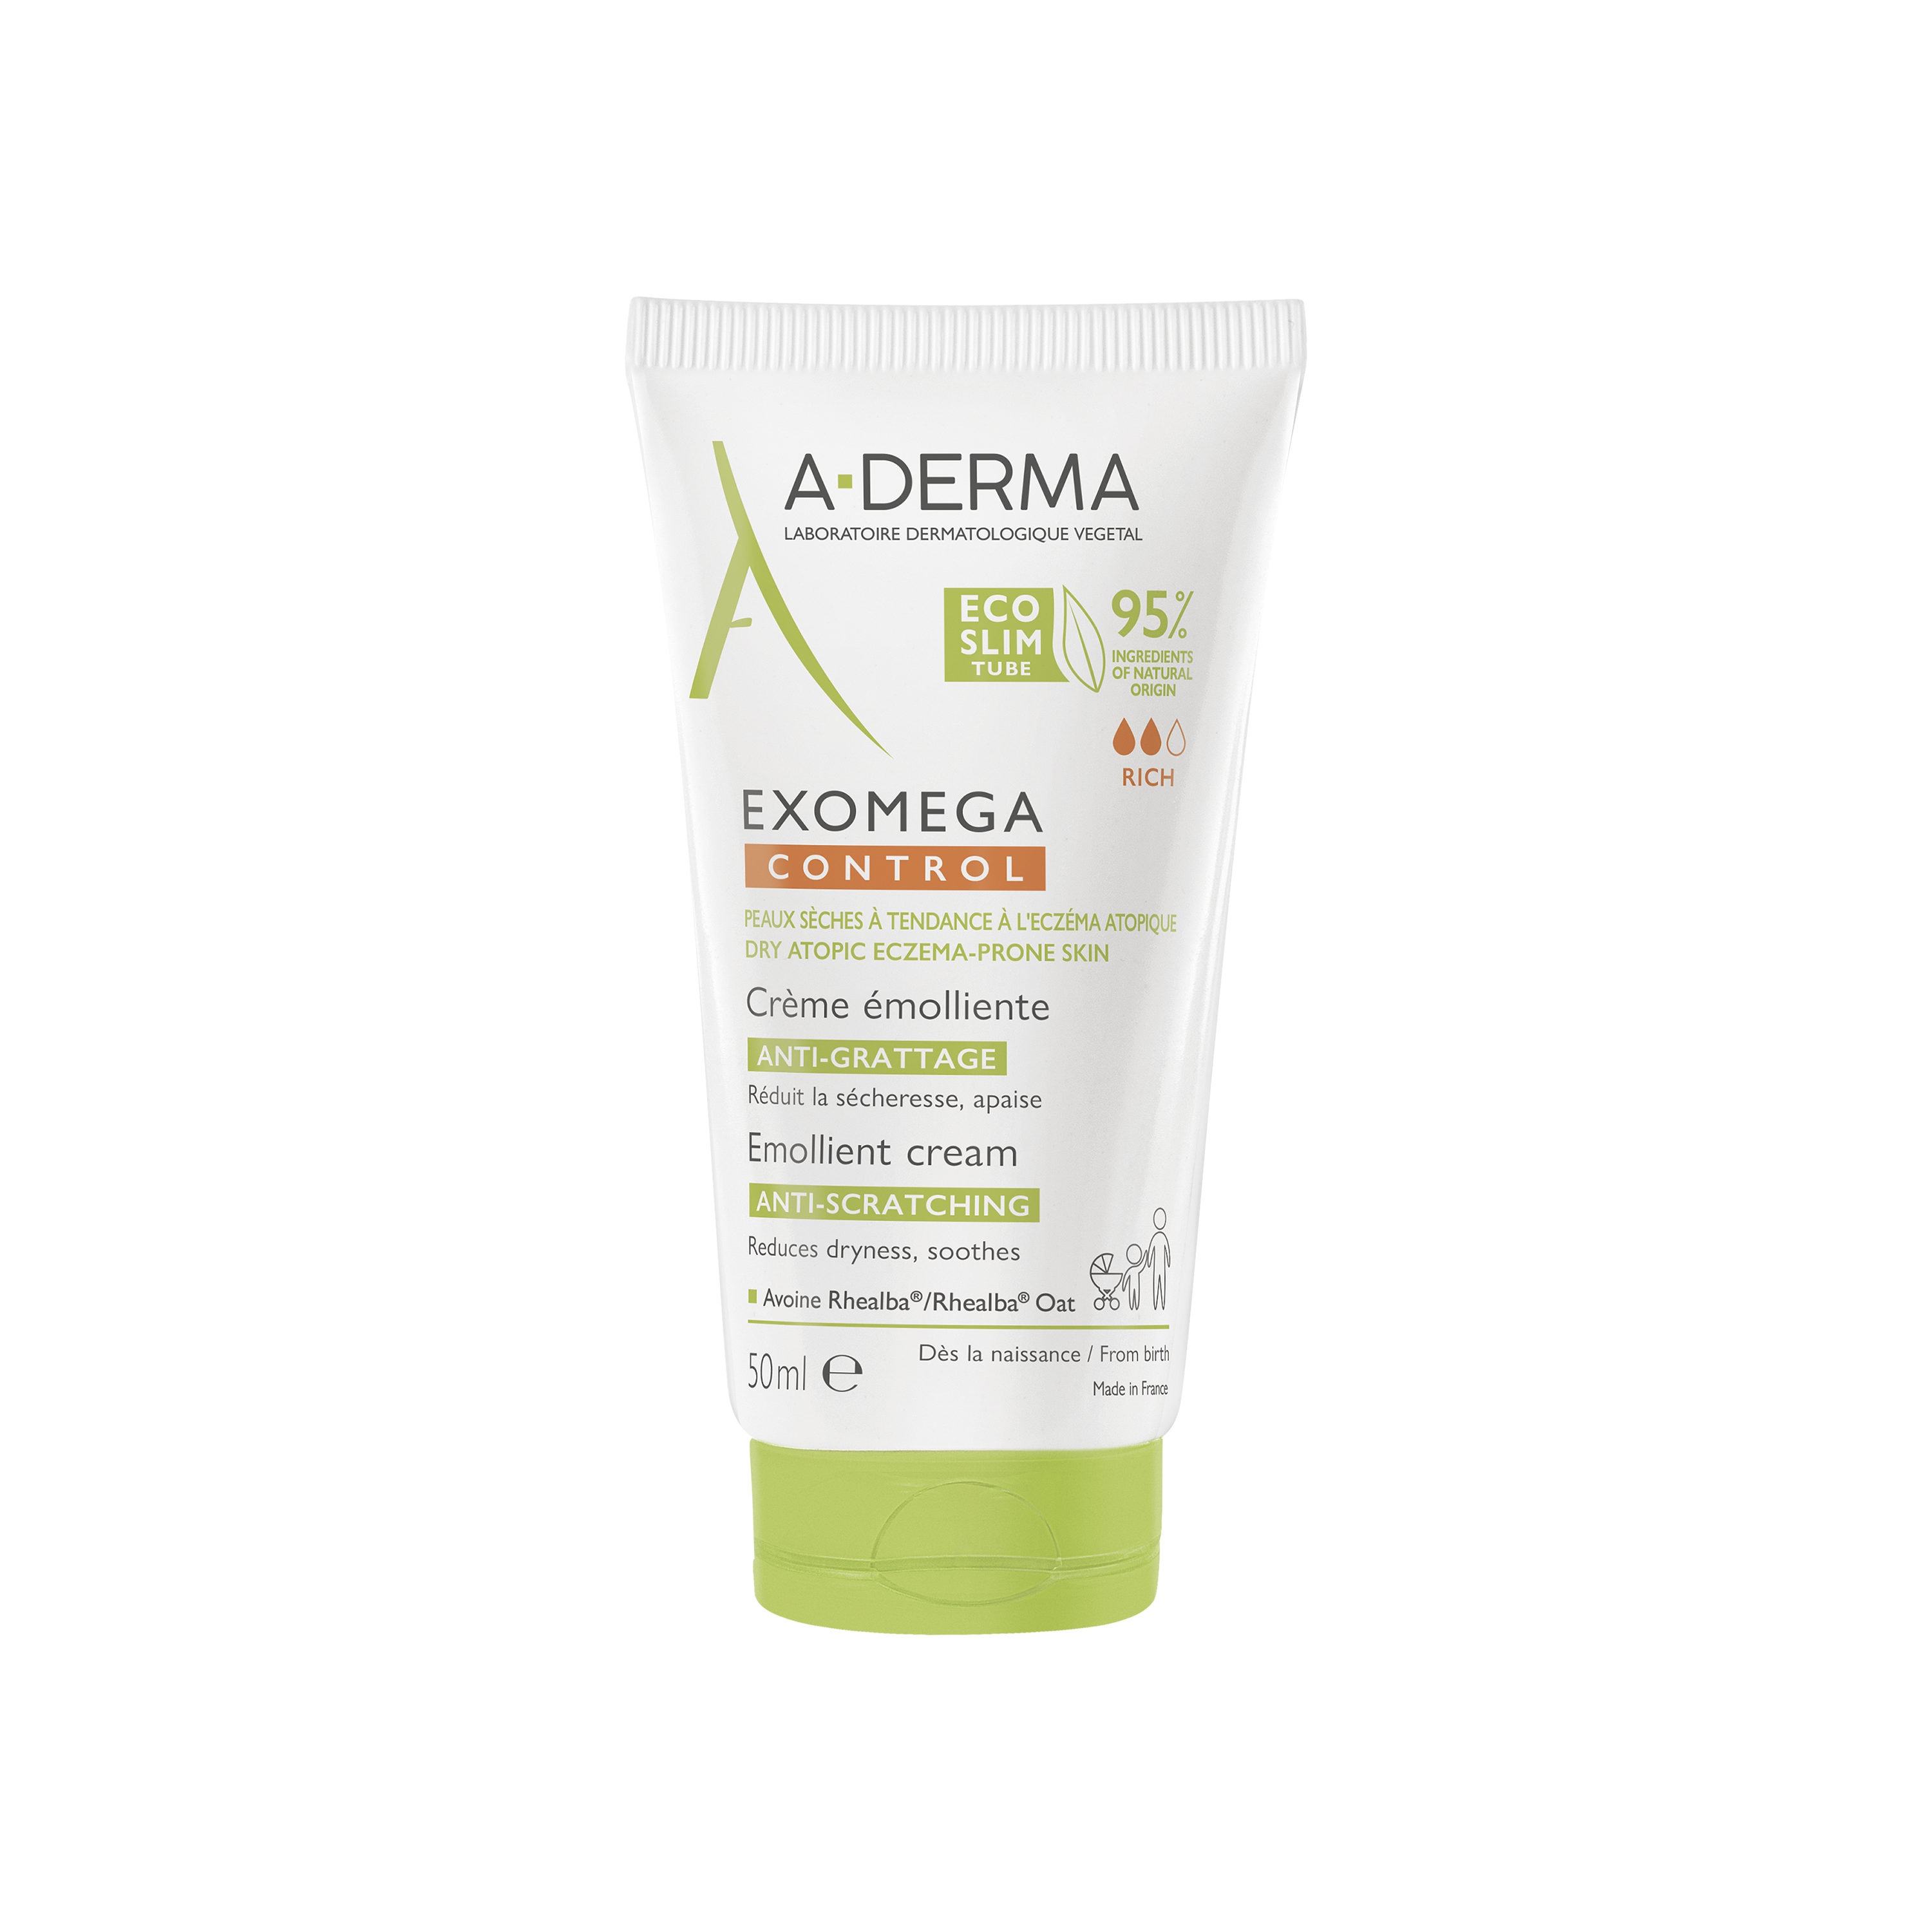 A-Derma A-Derma Exomega Control Cream, 50 ml